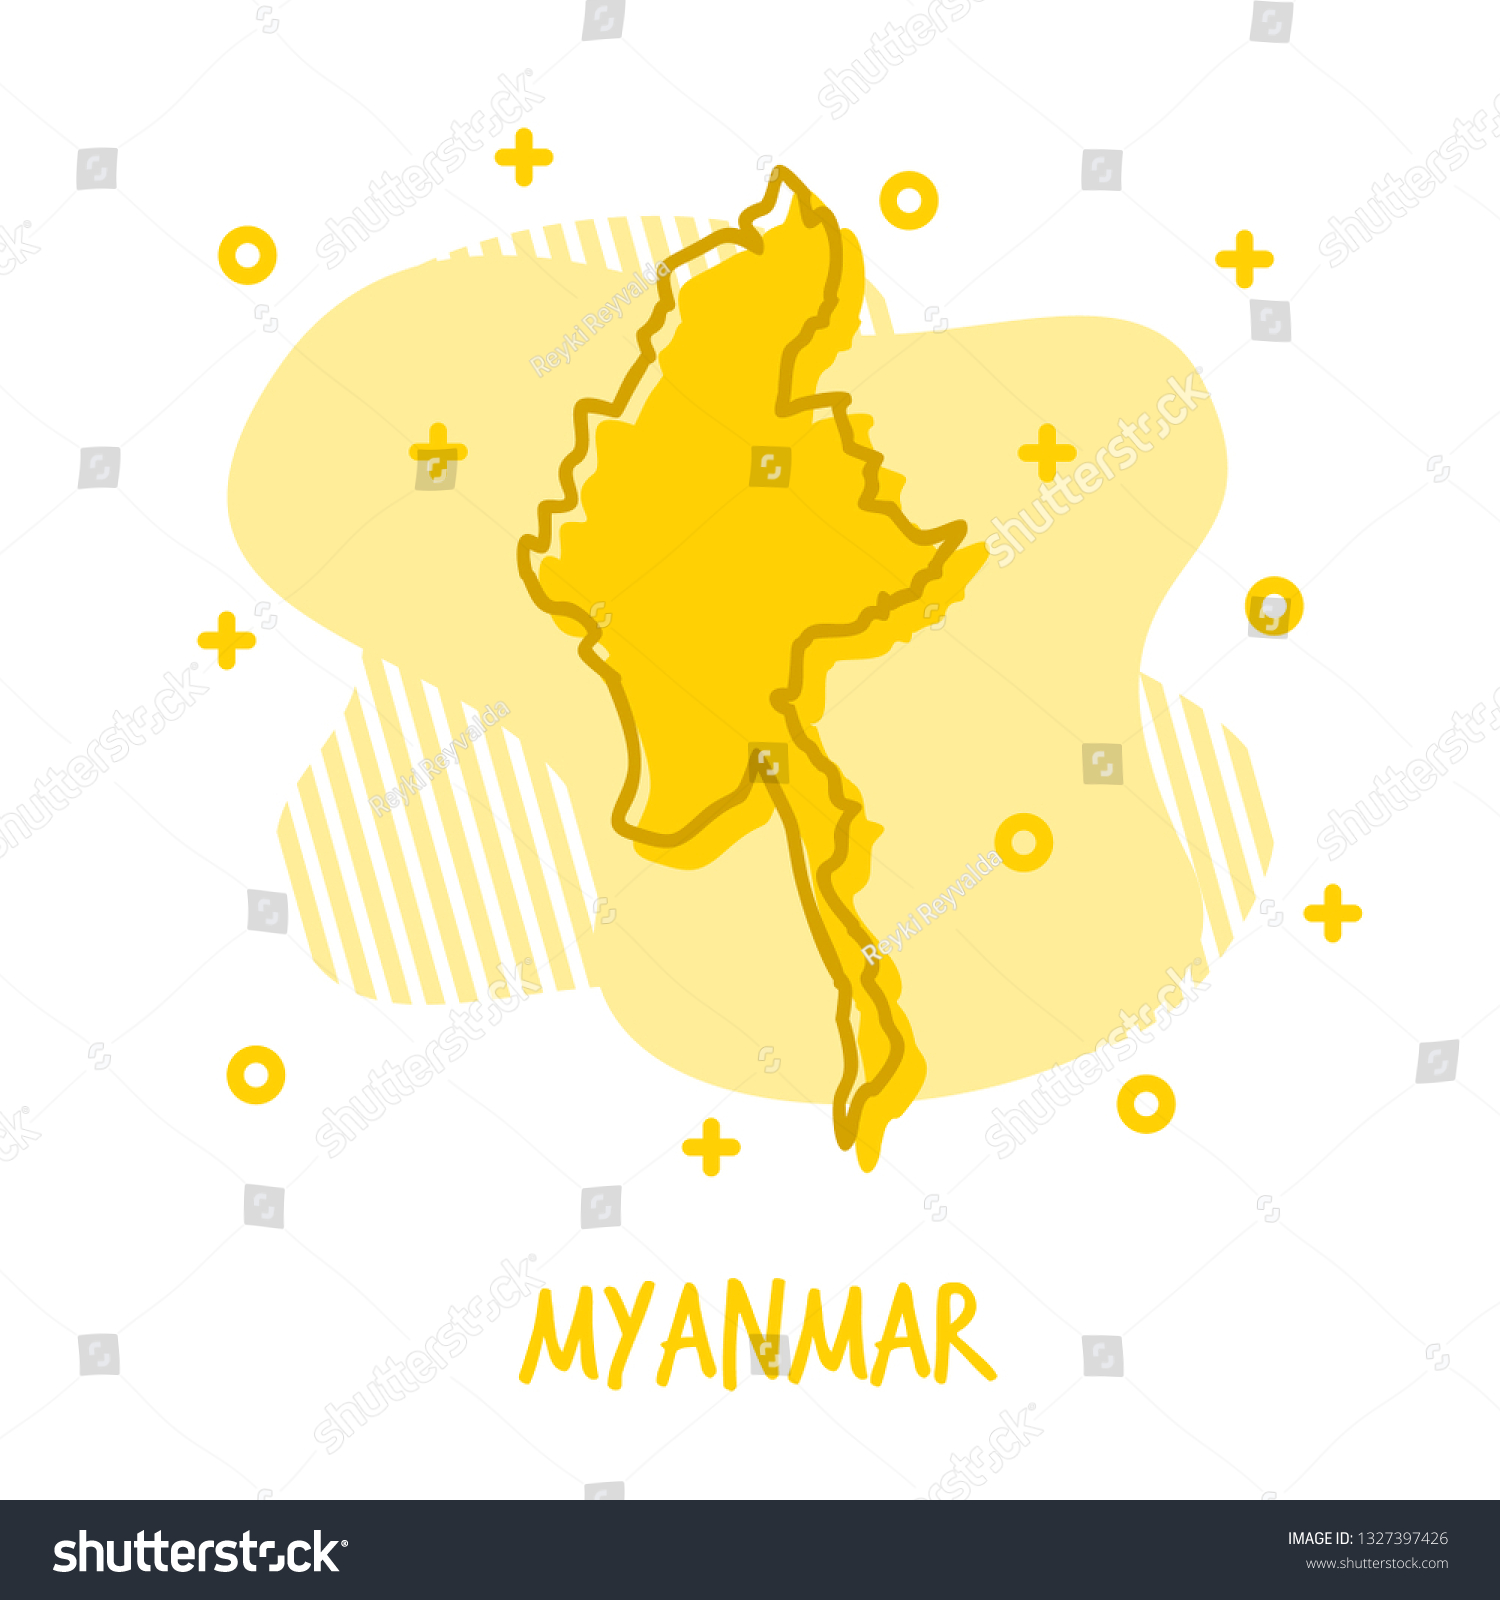 30+ Myanmar Map Cartoon Images Gif